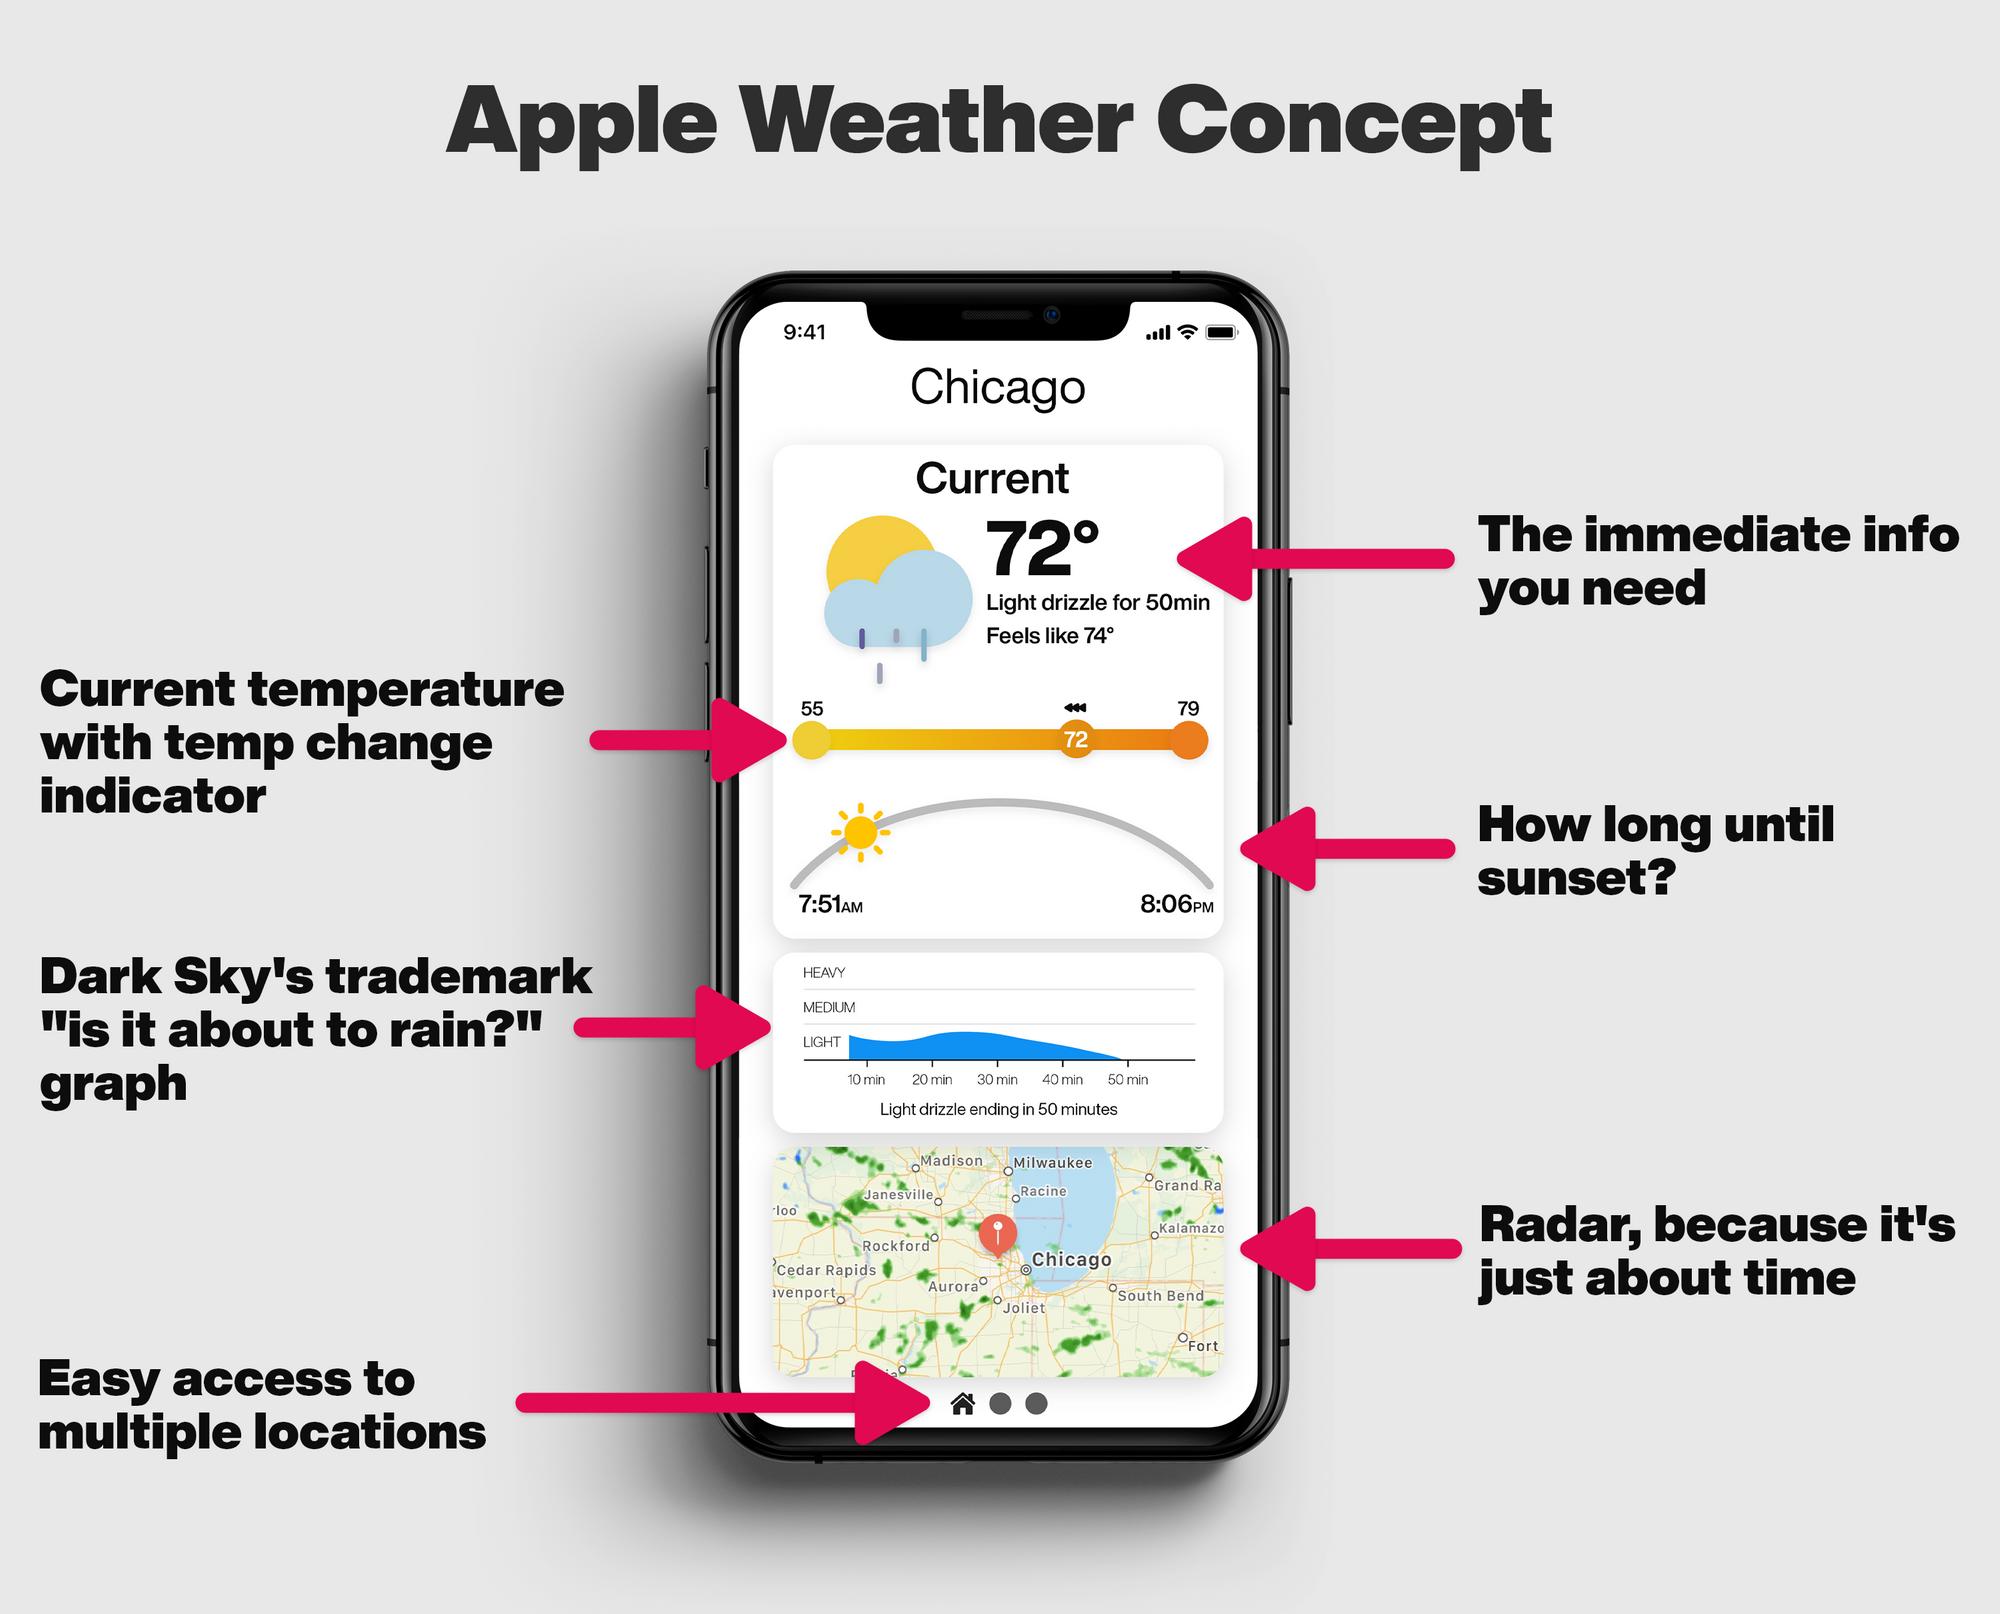 Apple Weather Concept Breakdown